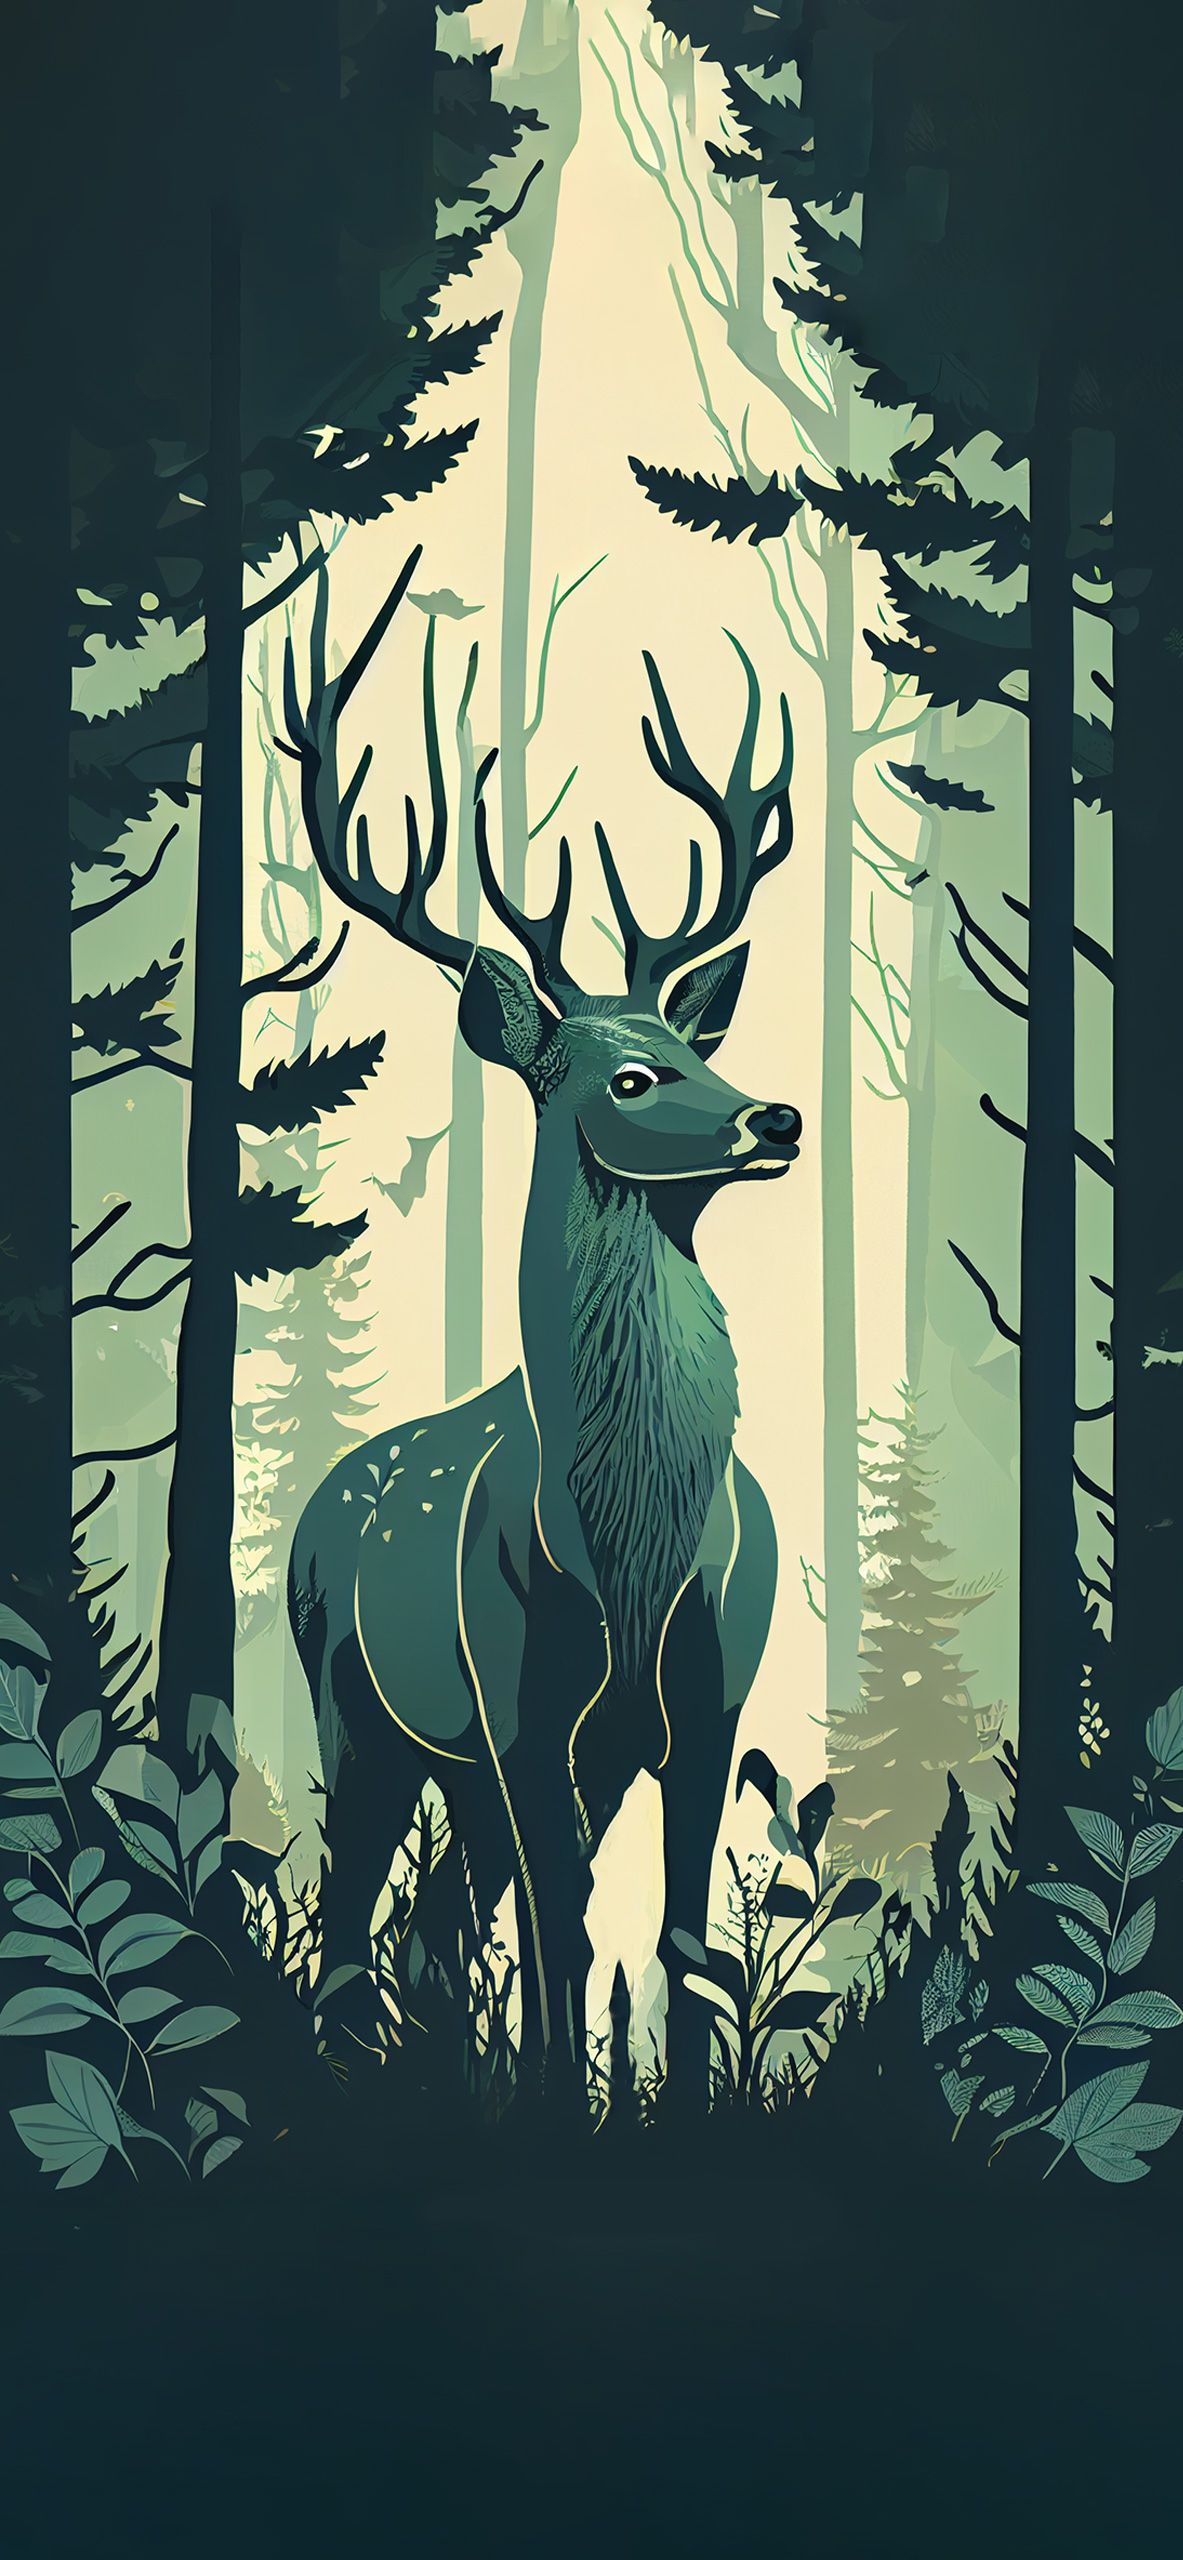 IPhone wallpaper of a deer in the forest - Deer